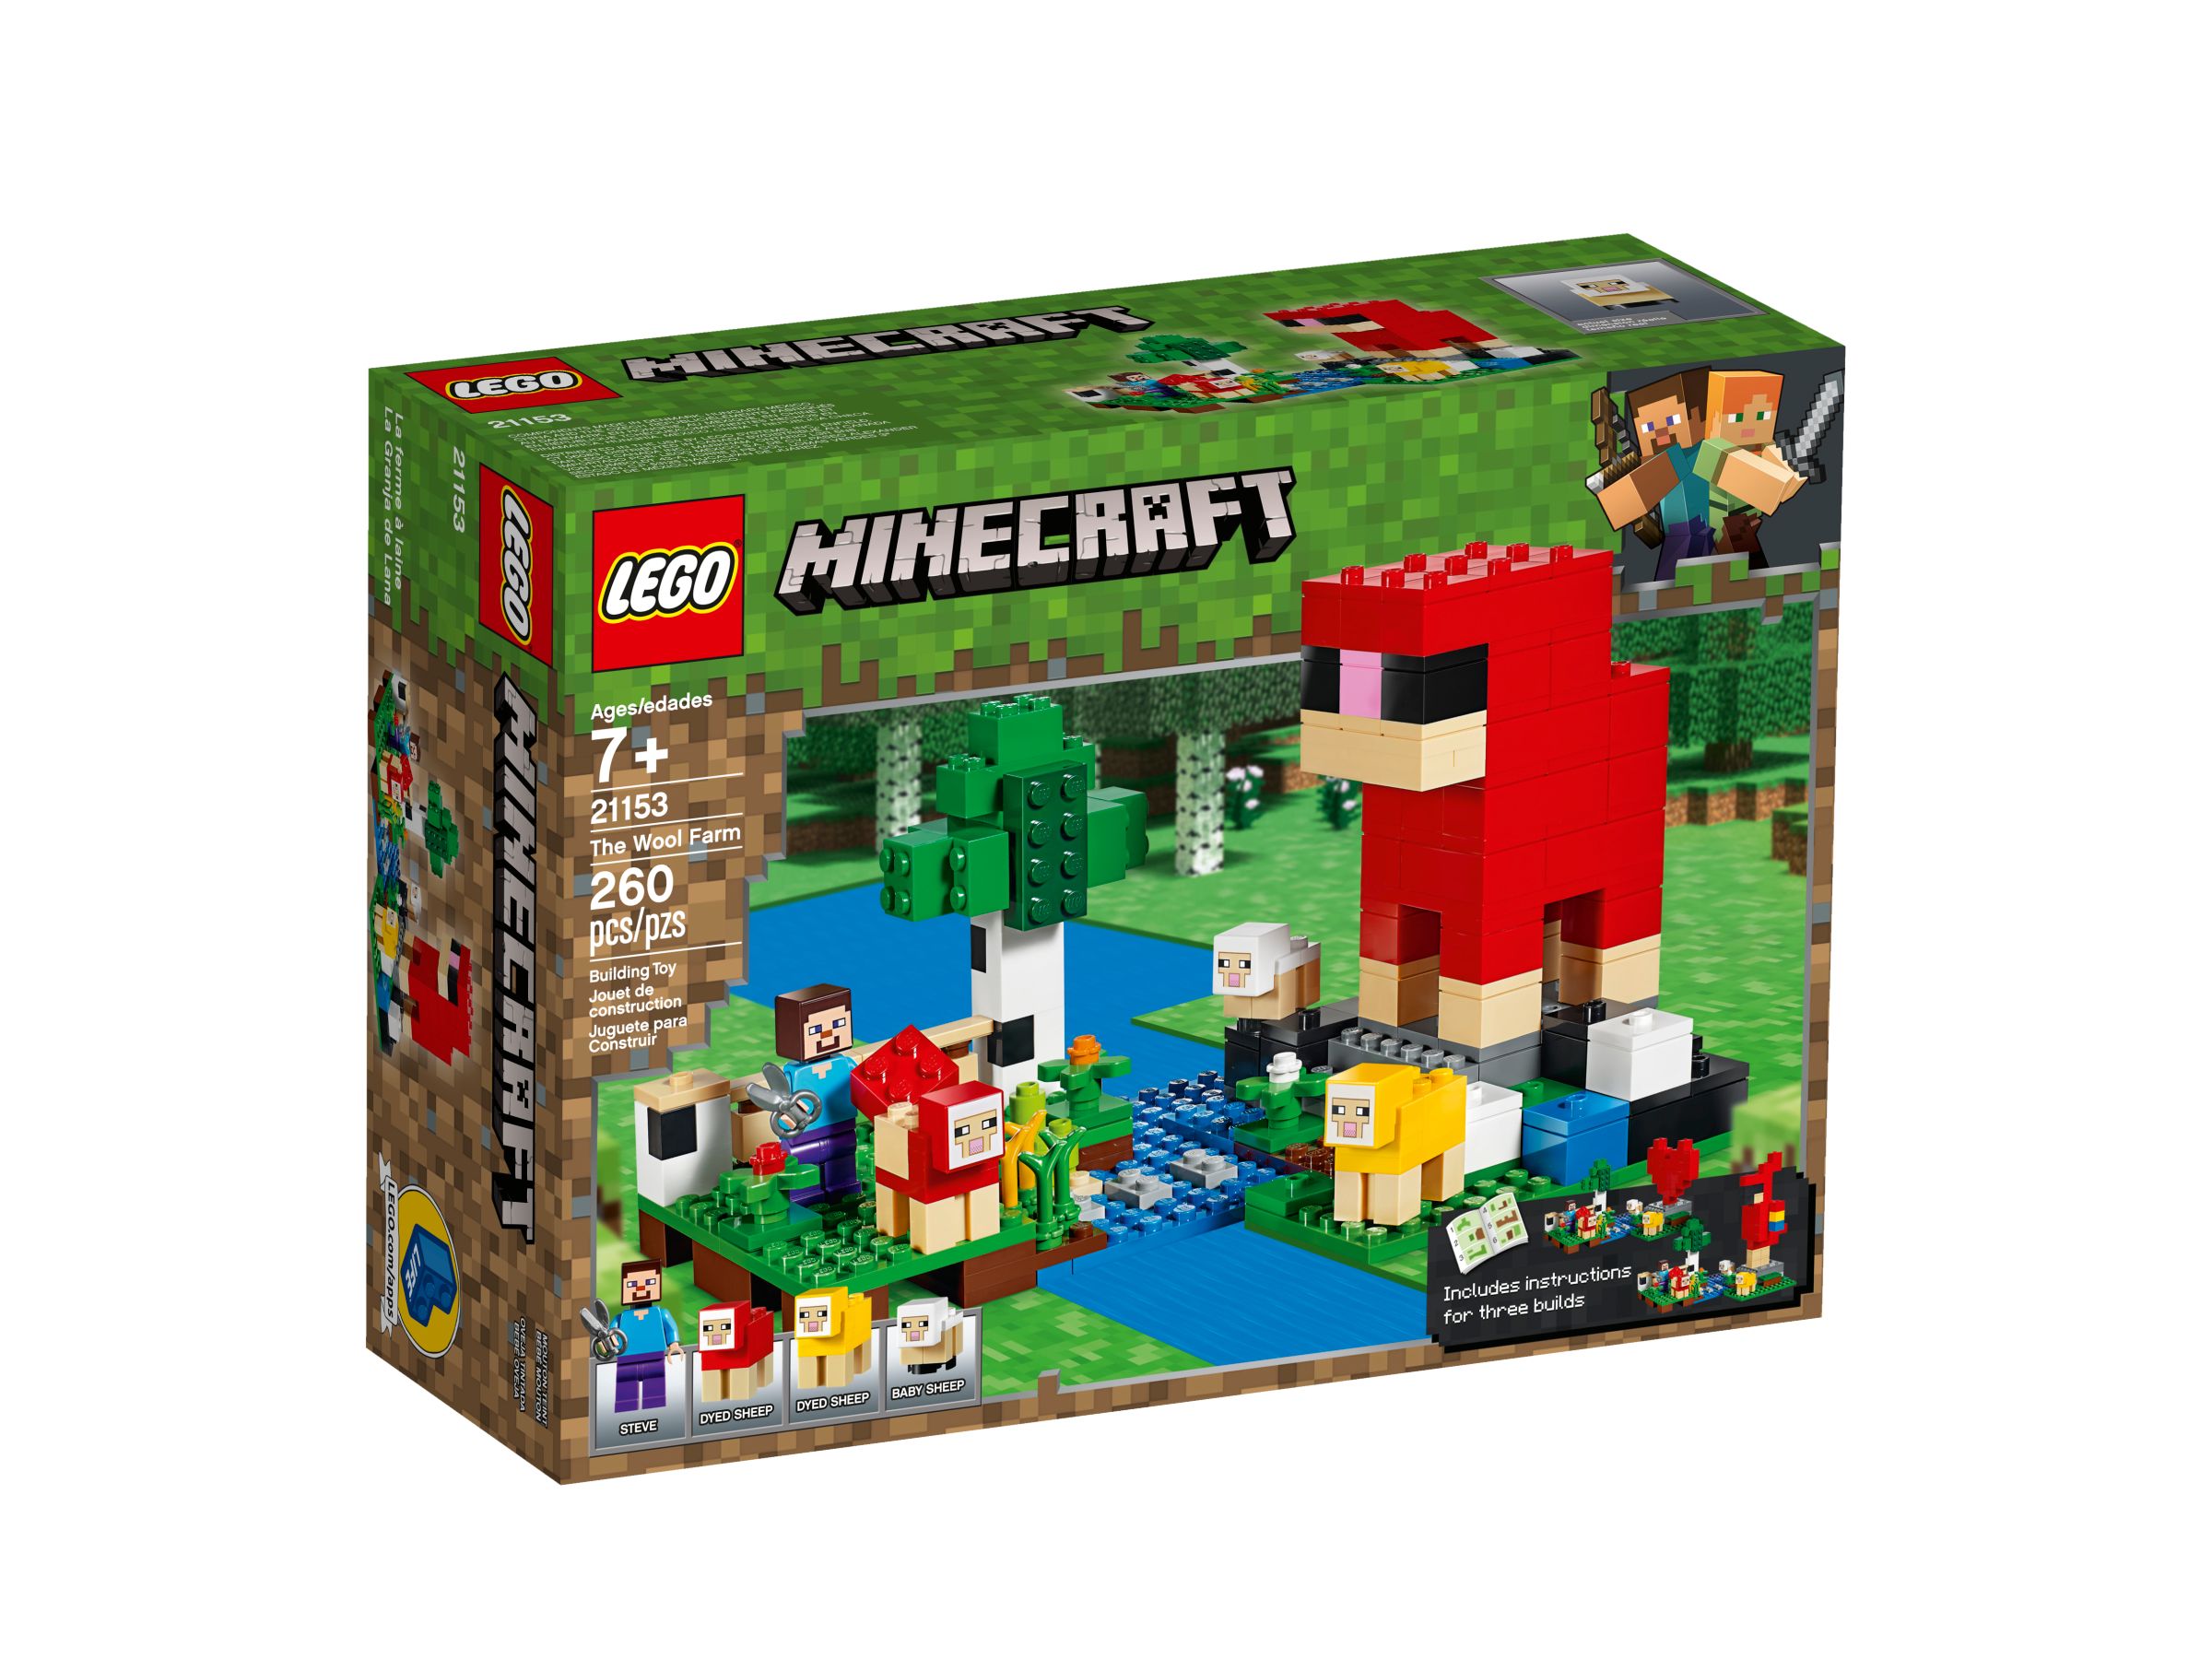 LEGO Minecraft 21153 Die Schaffarm LEGO_21153_alt1.jpg